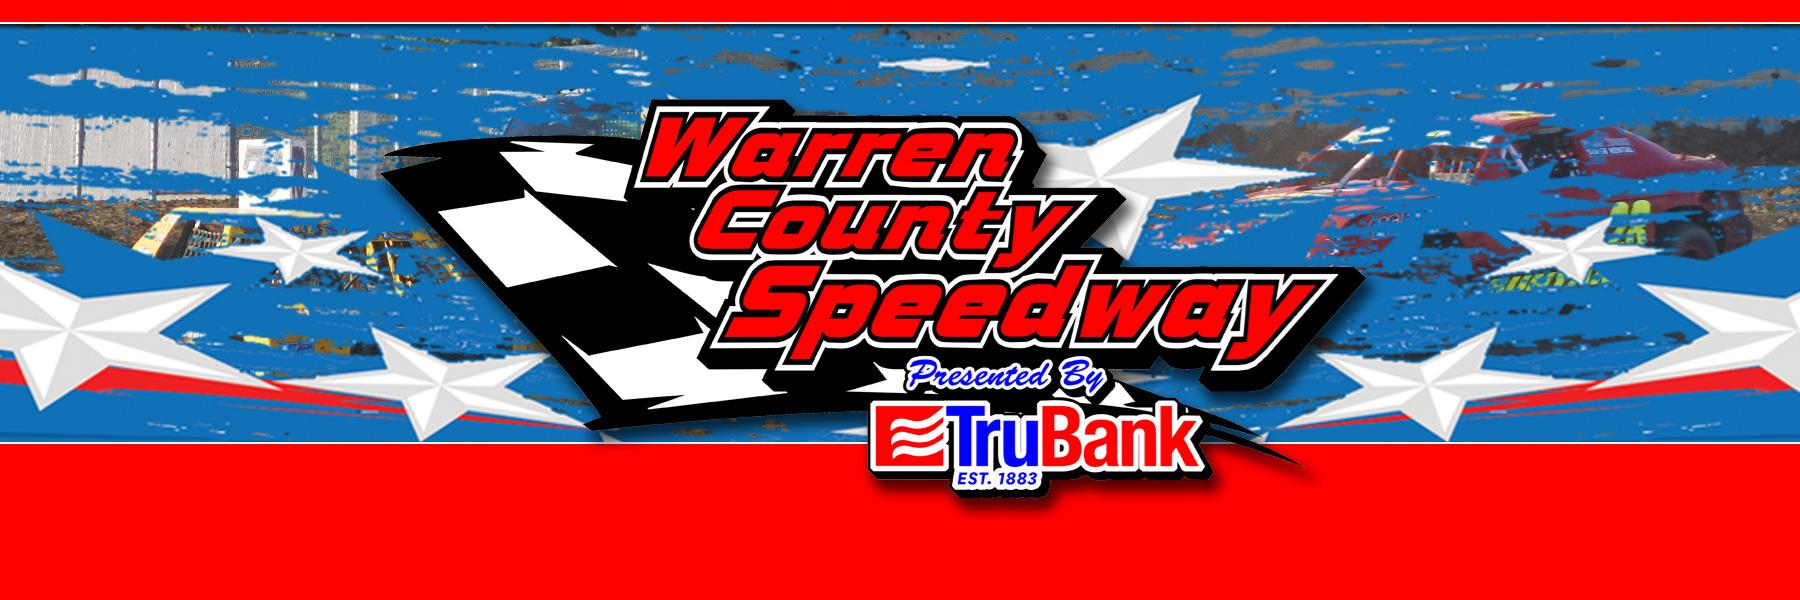 7/27/2022 - Warren County Speedway